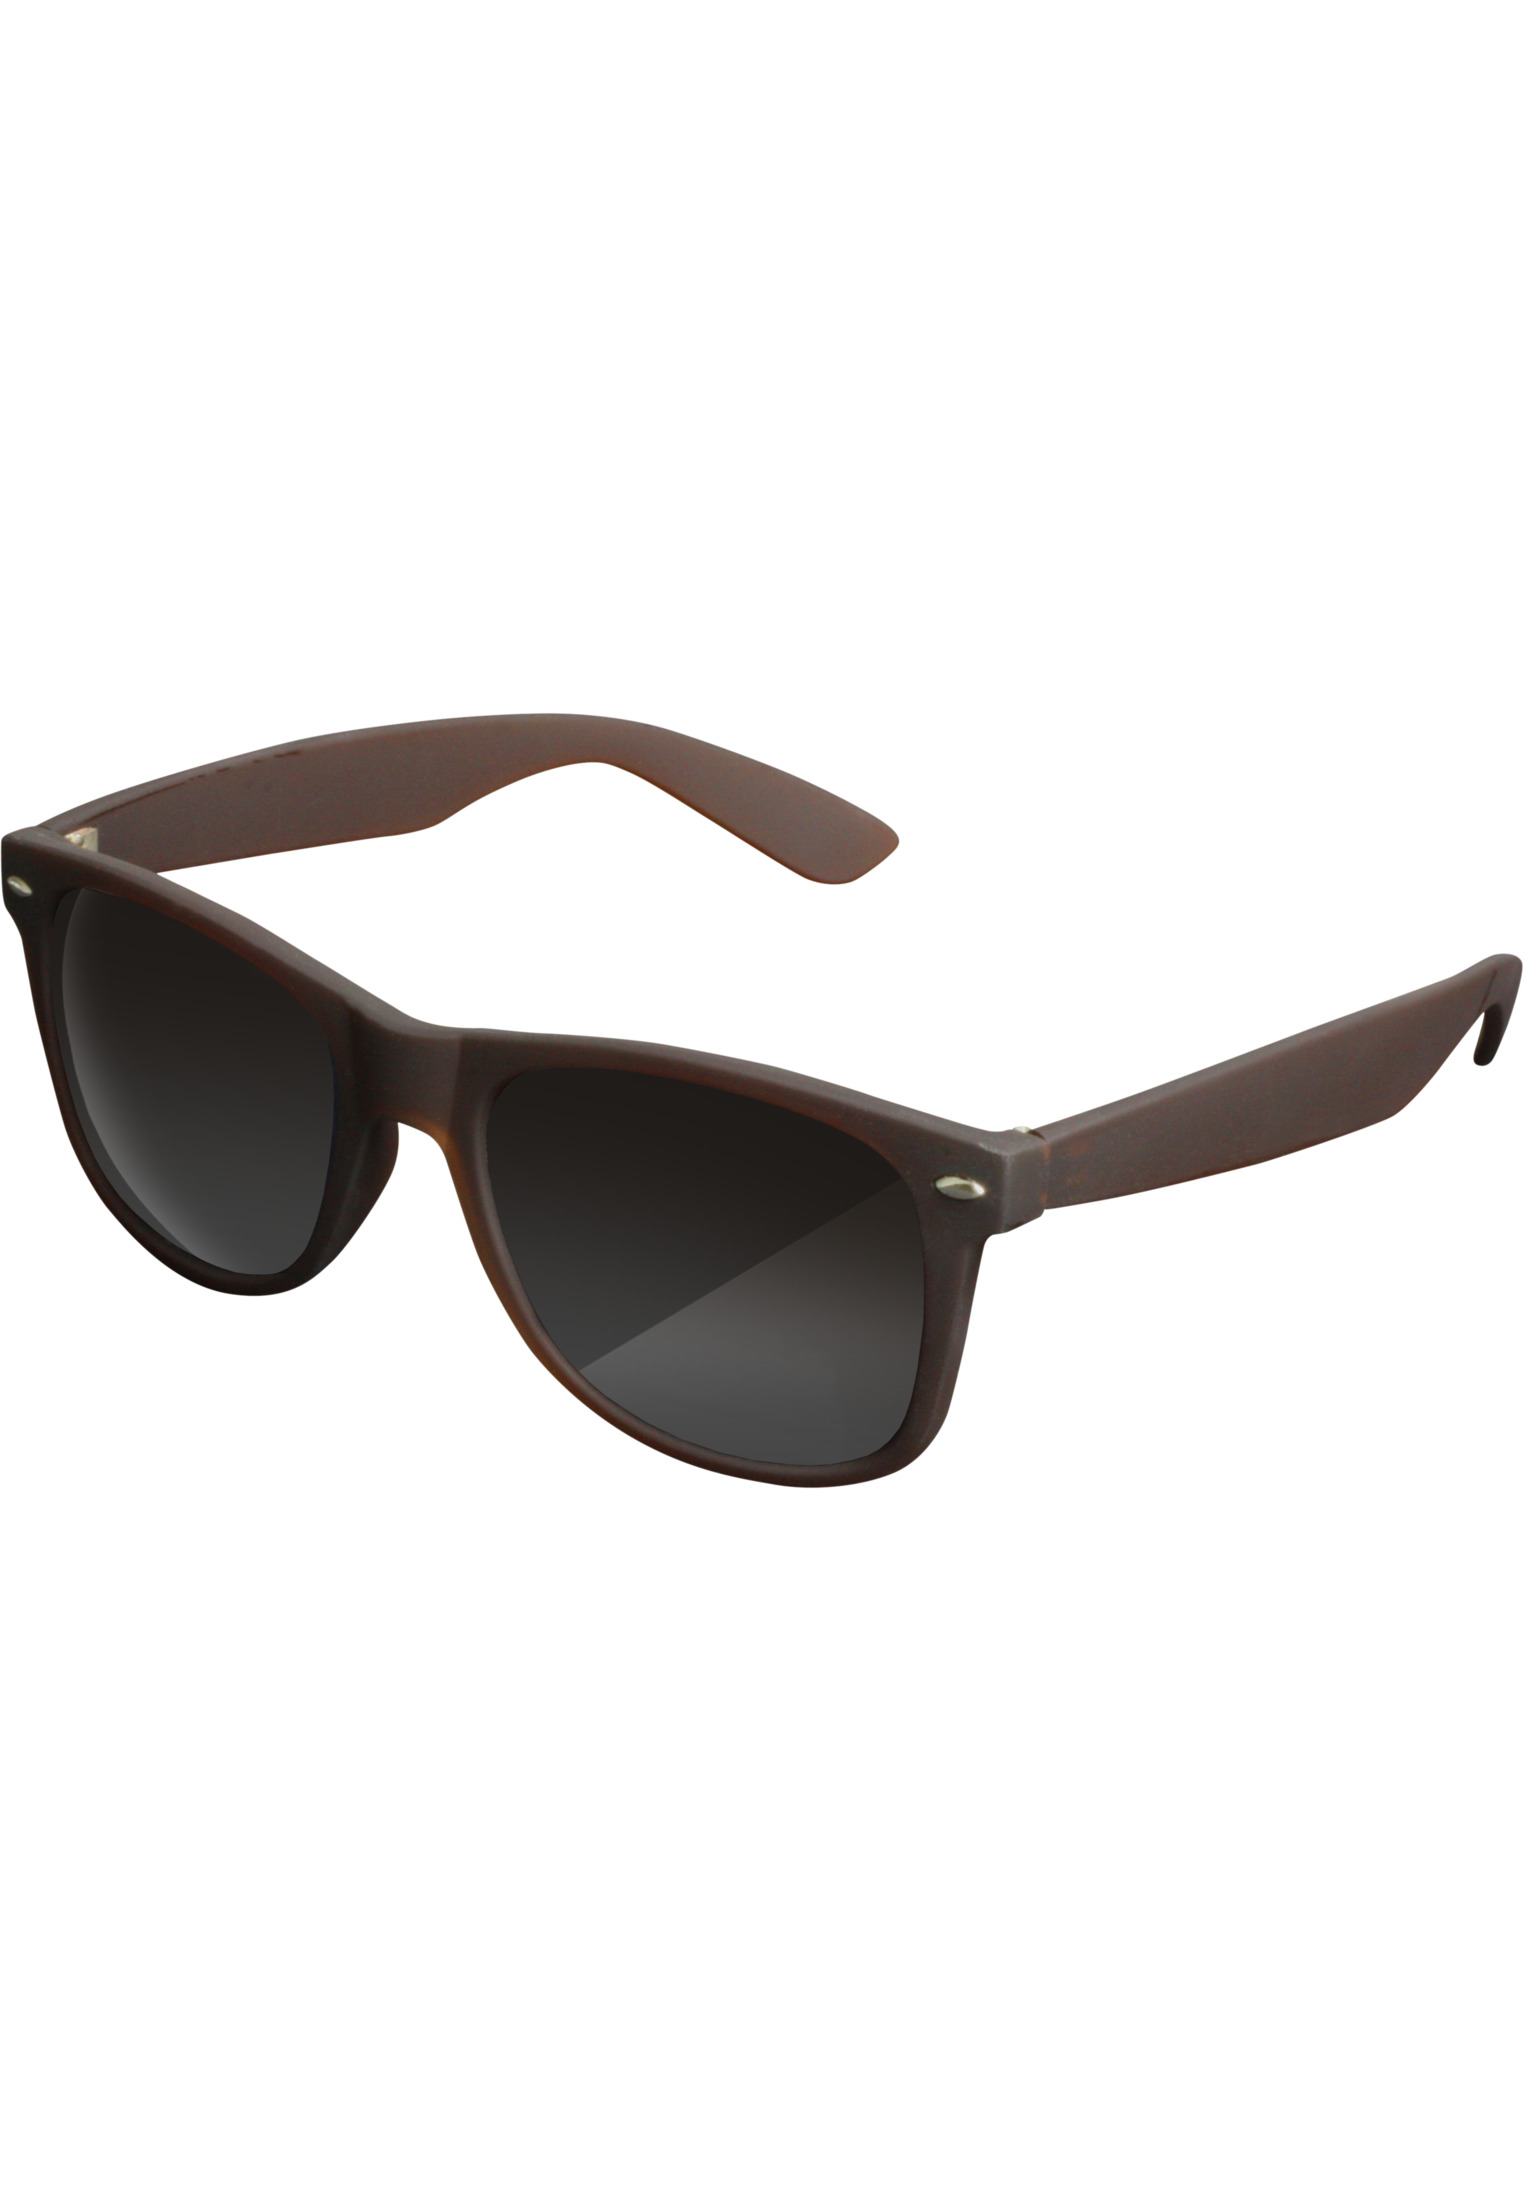 Likoma sunglasses brown